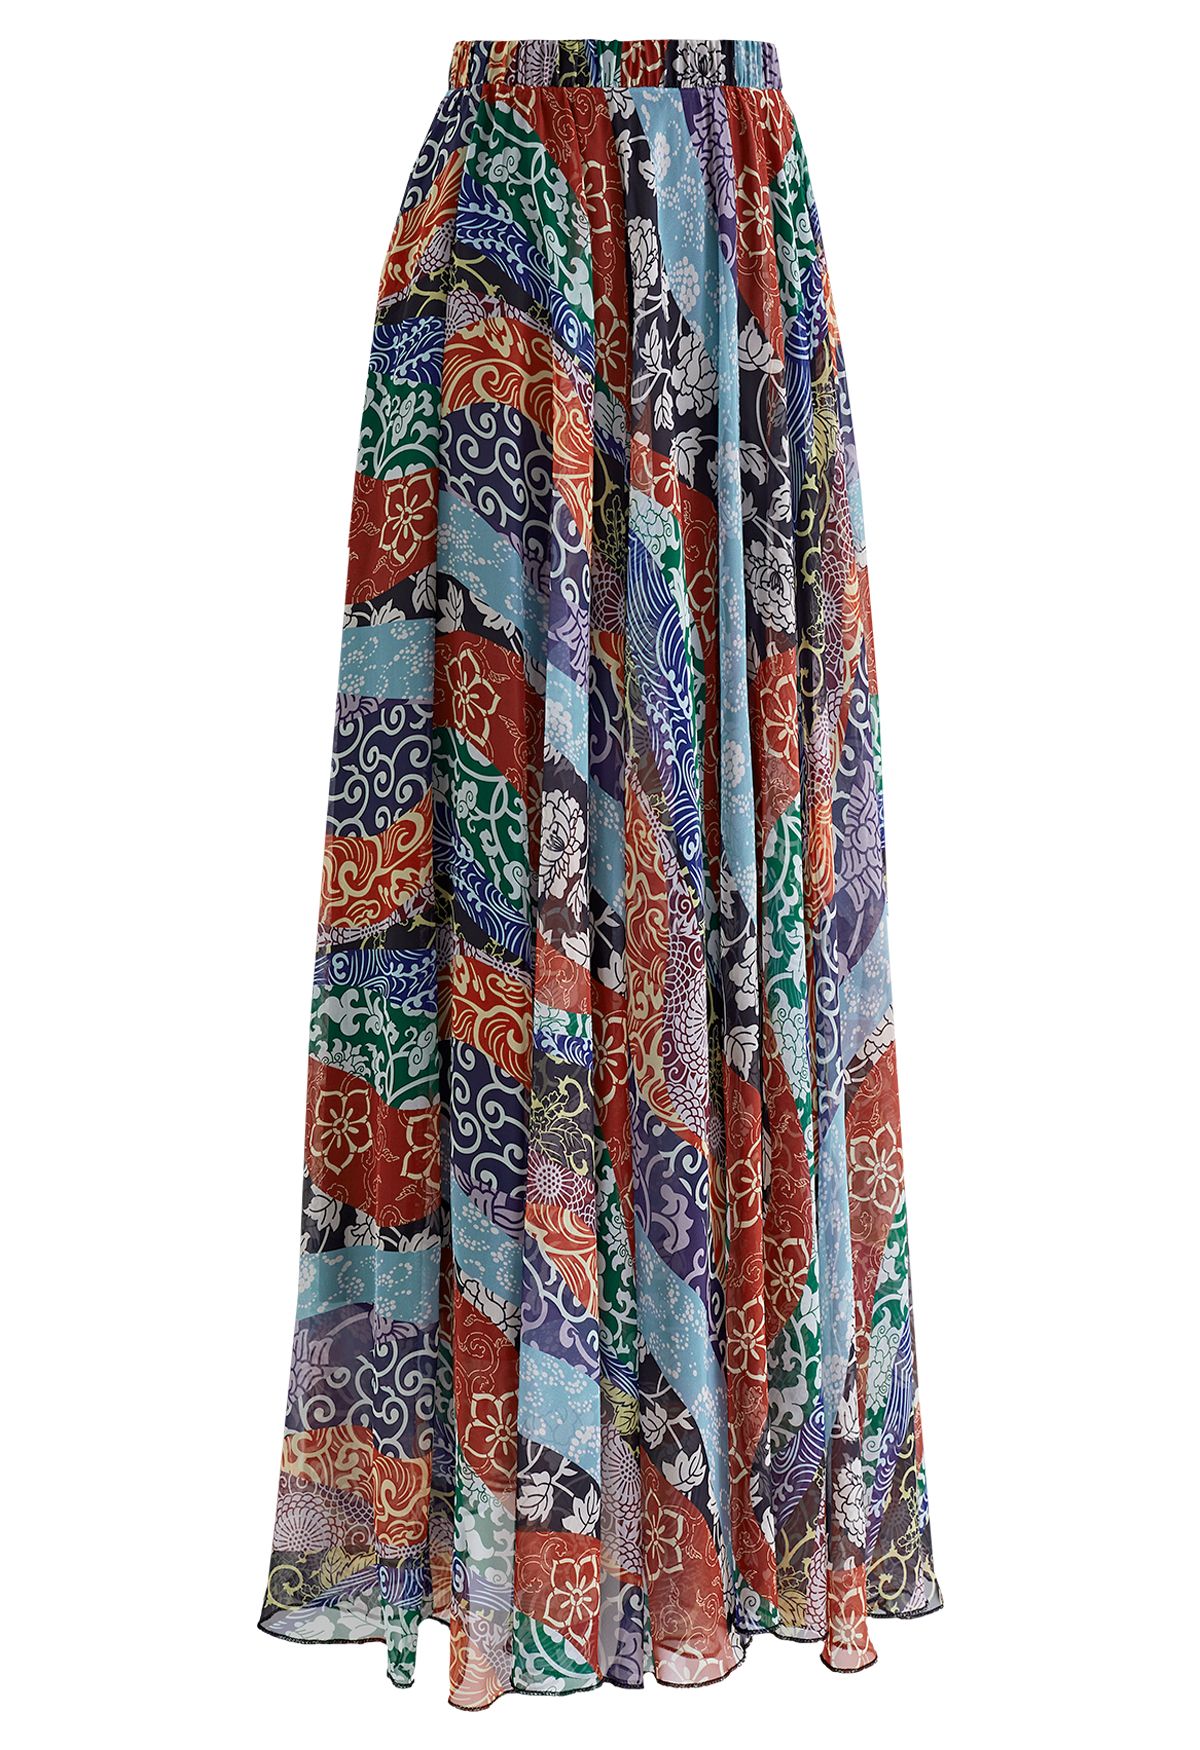 Bohemian Blossom Print Chiffon Maxi Skirt